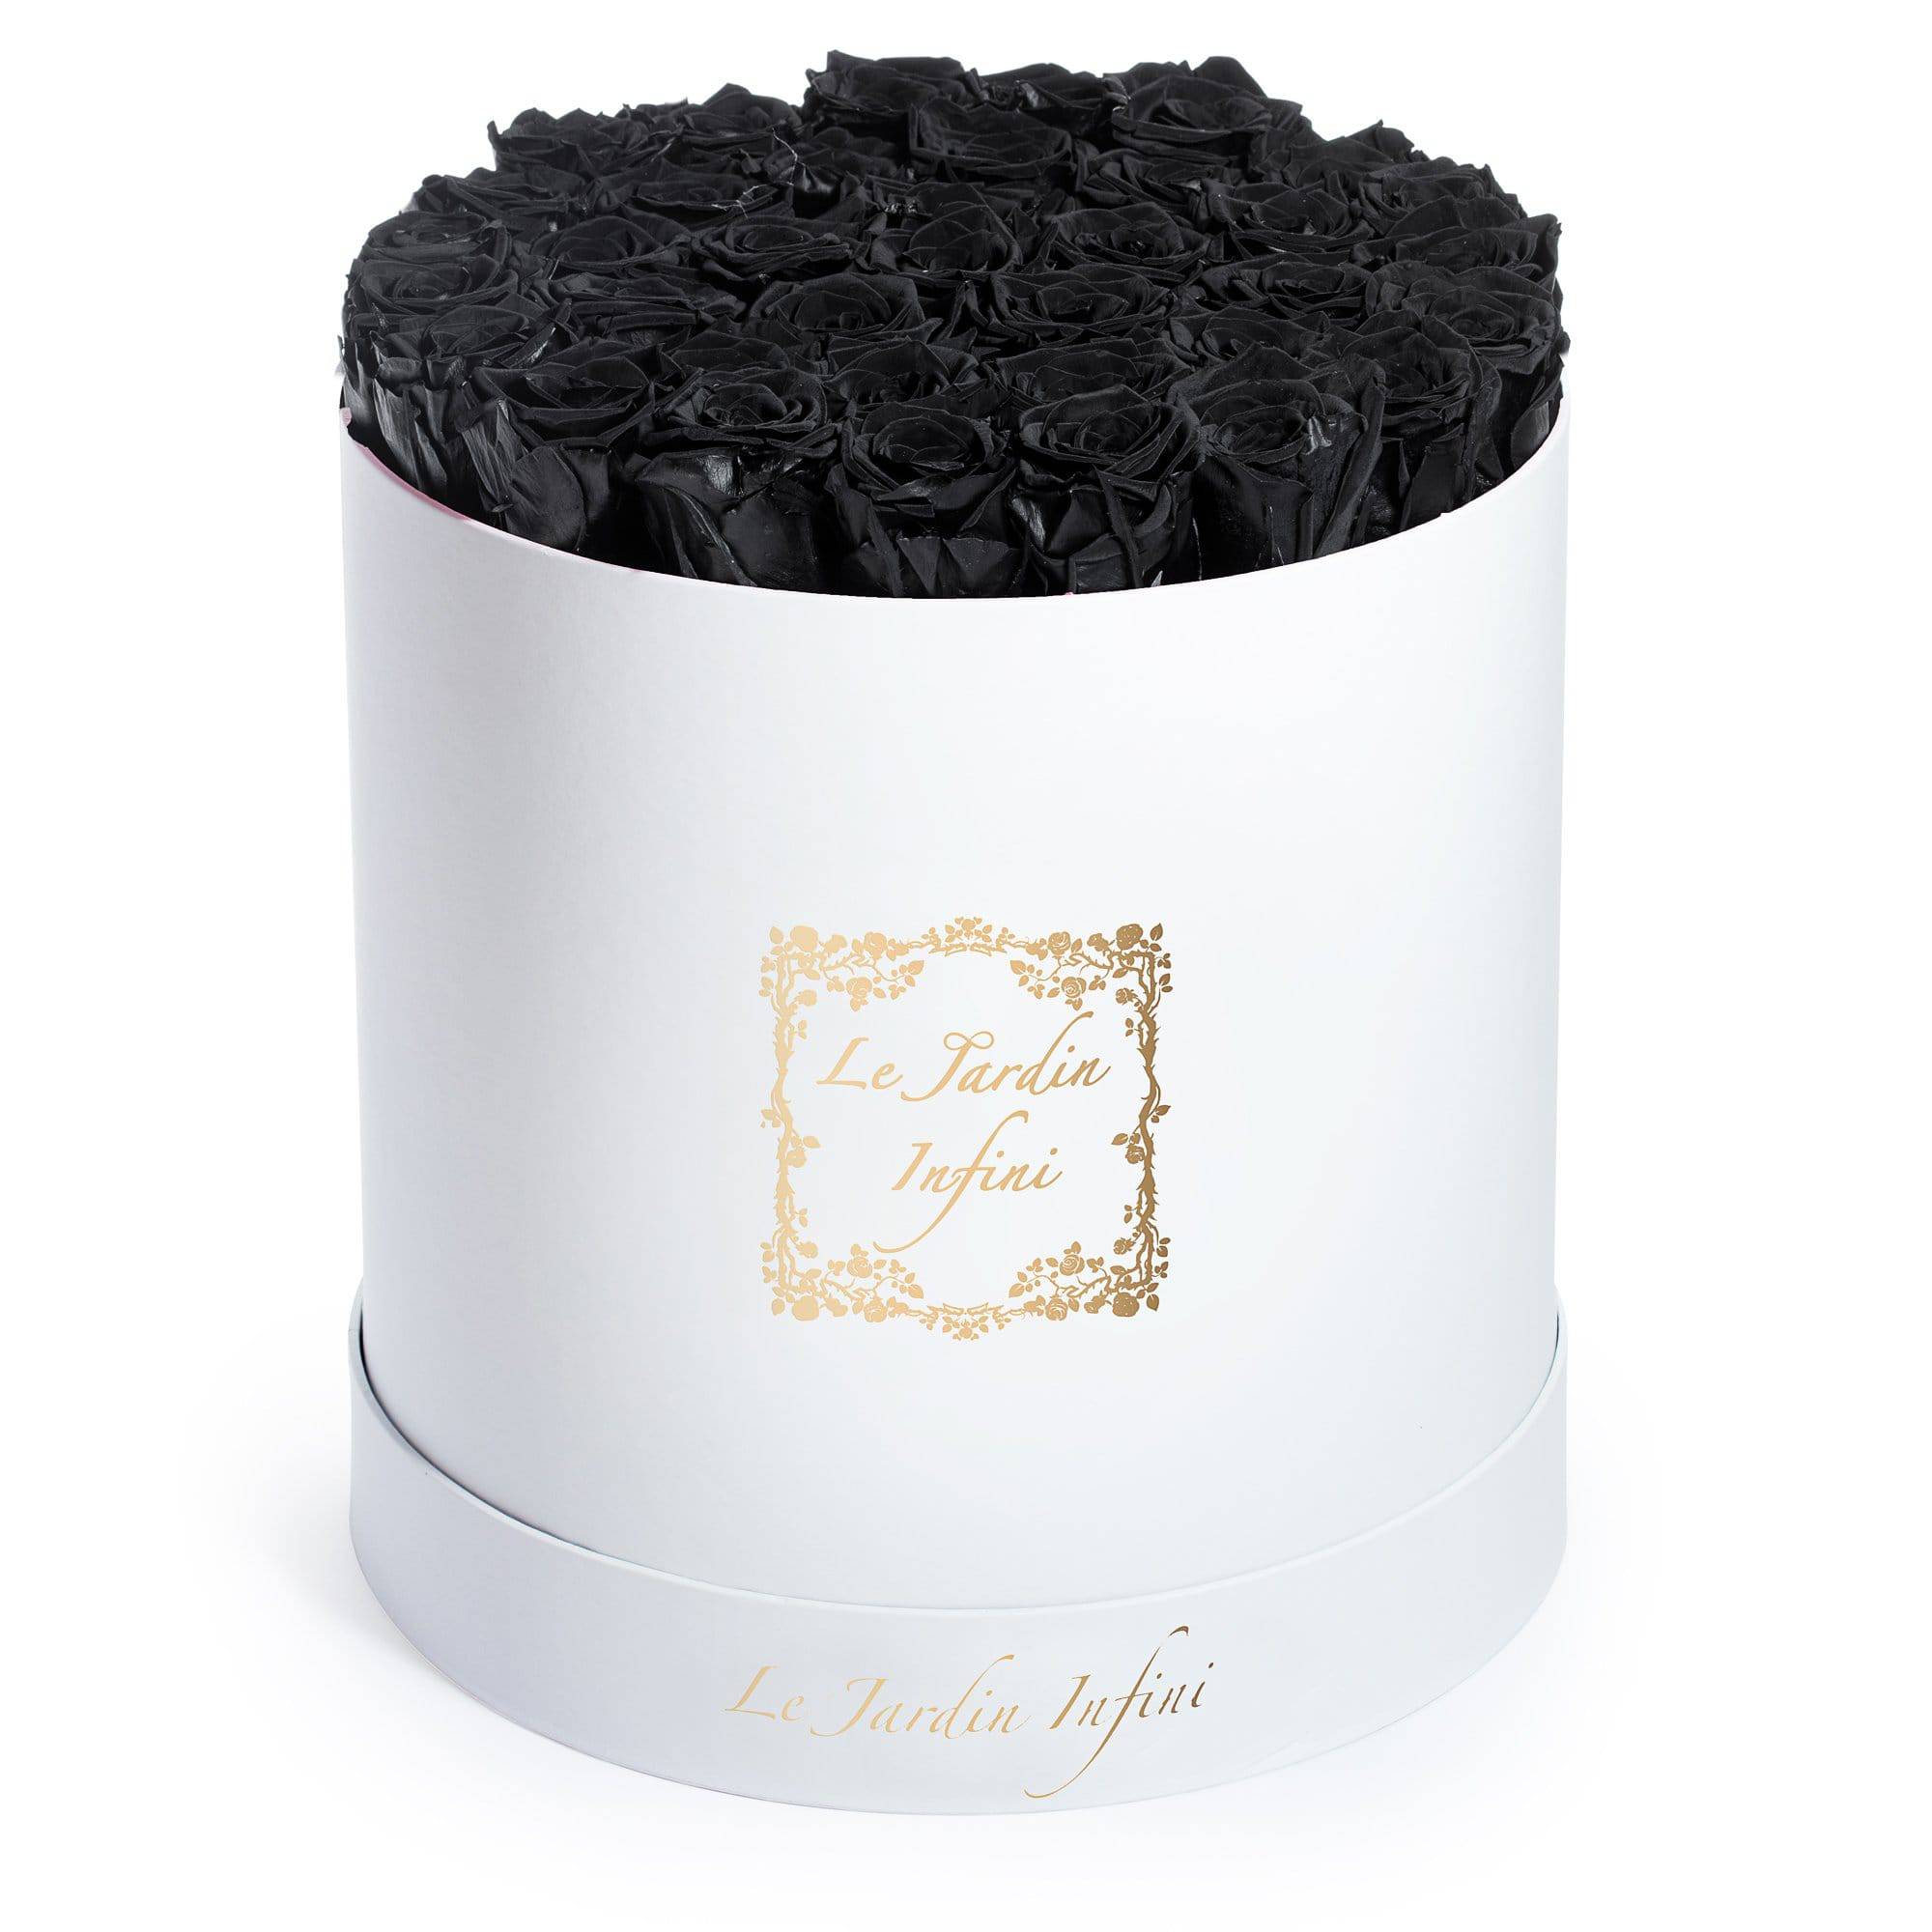 Matte Black Preserved Roses - Large Round White Box